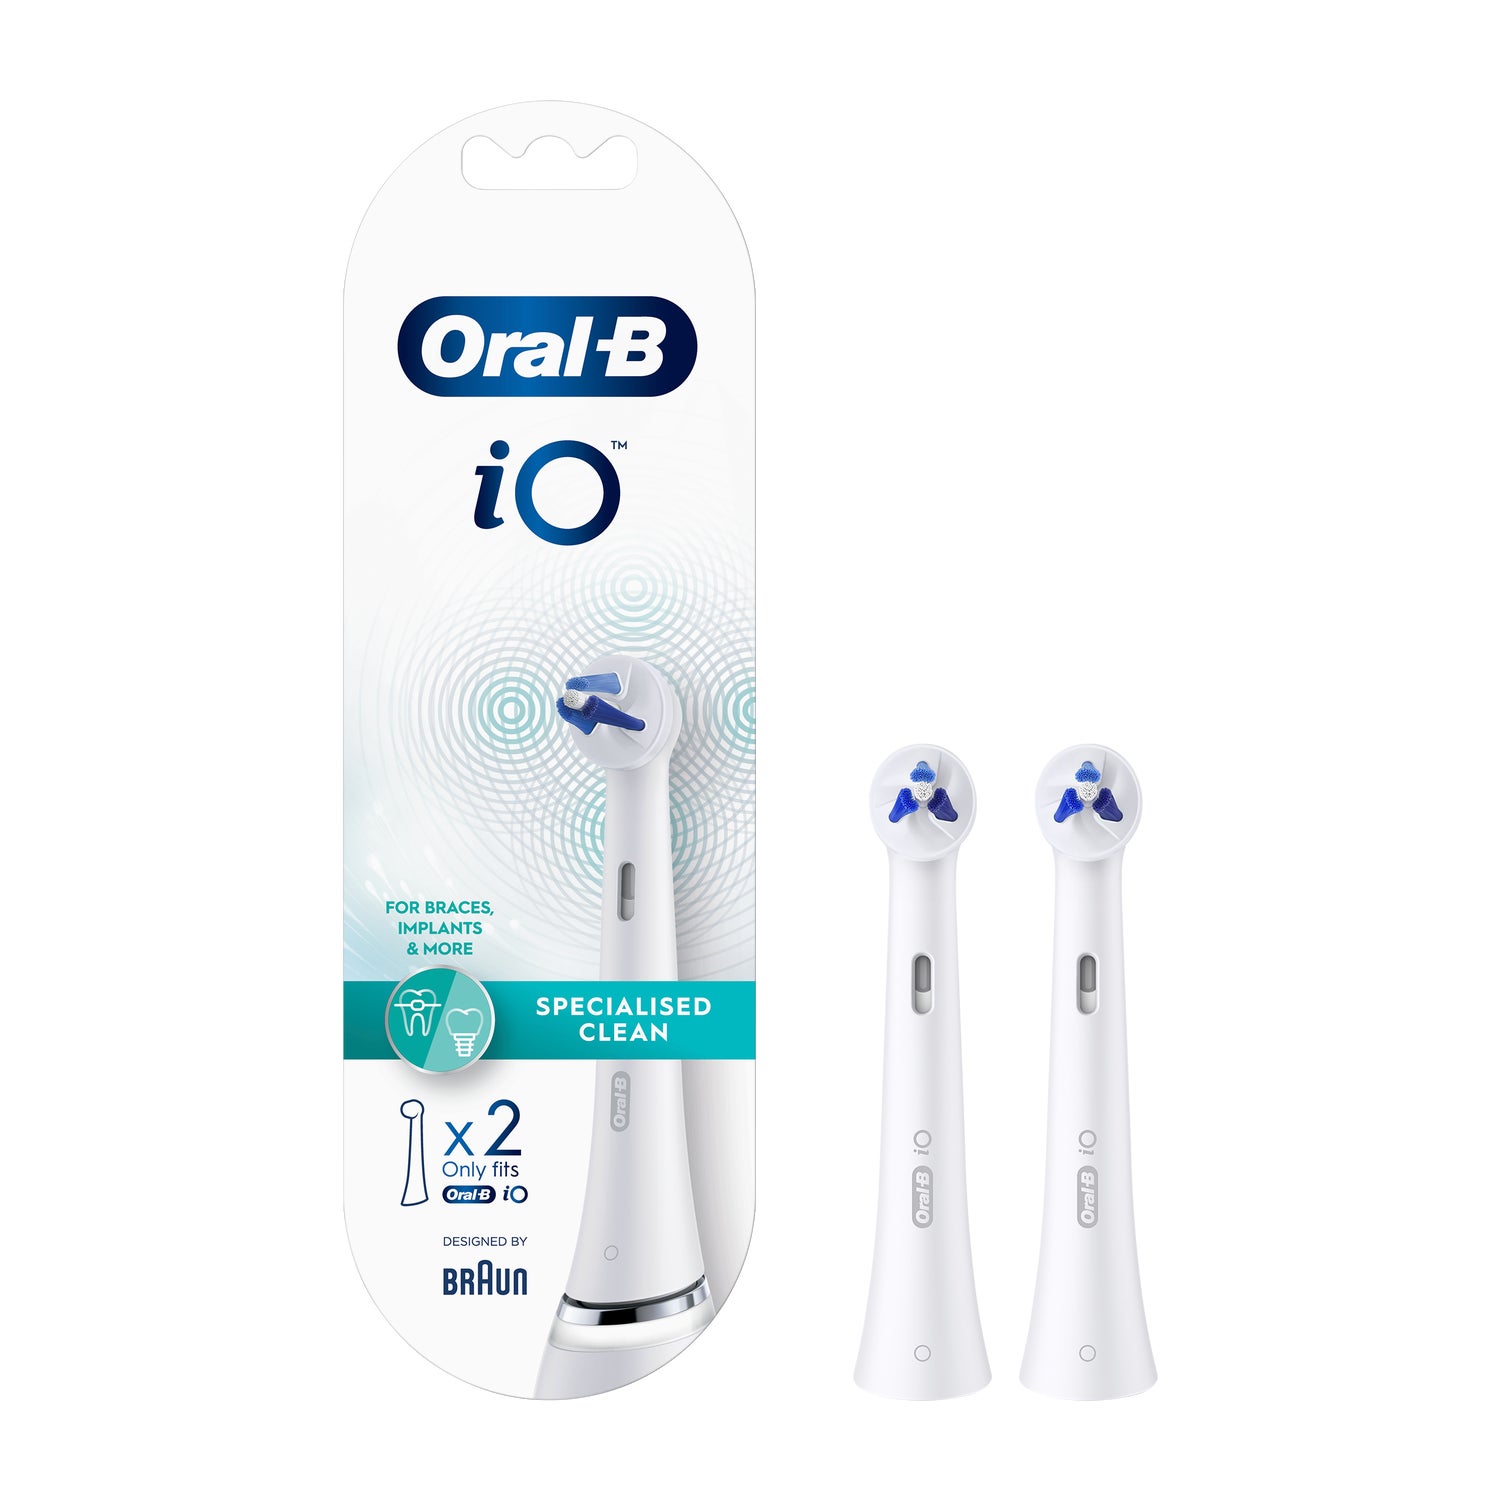 Oral-B Oral-B Recambio Cepillo Dental Ortho 2 unidades